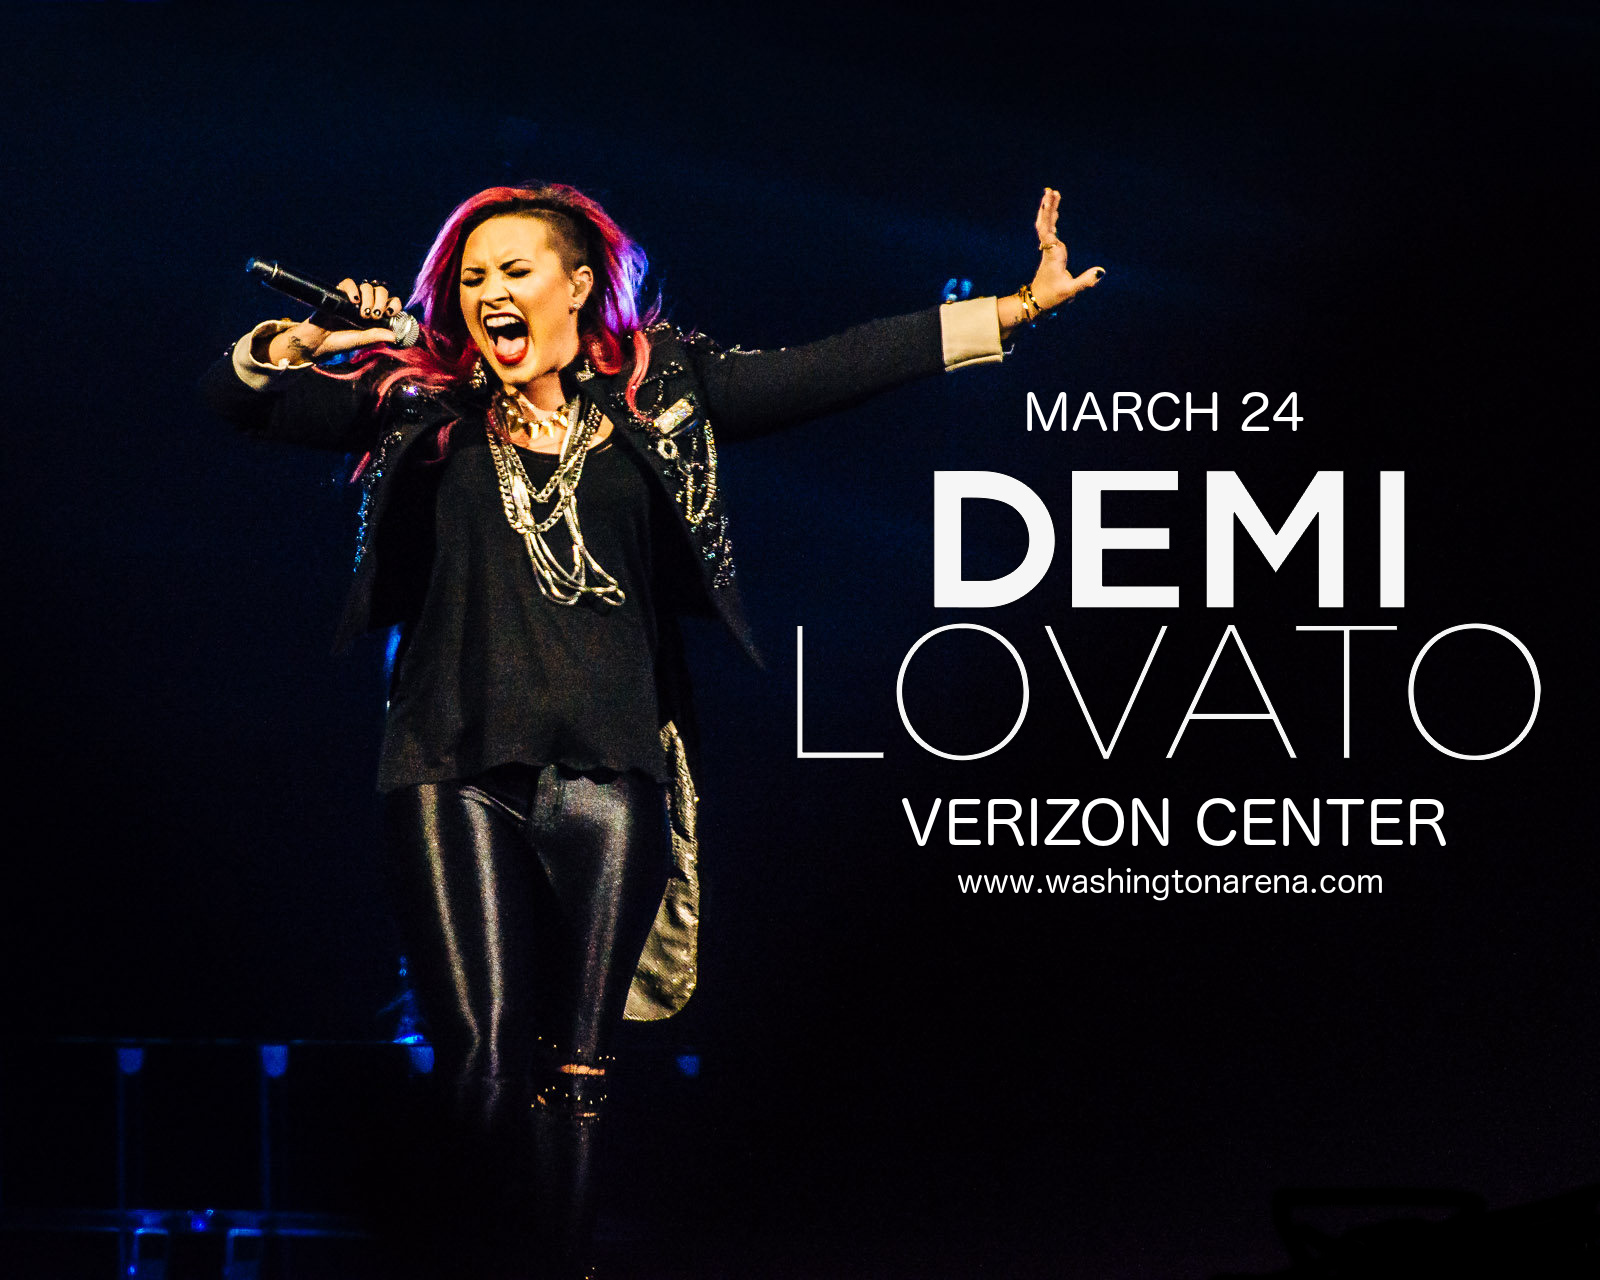 Demi Lovato & DJ Khaled at Verizon Center